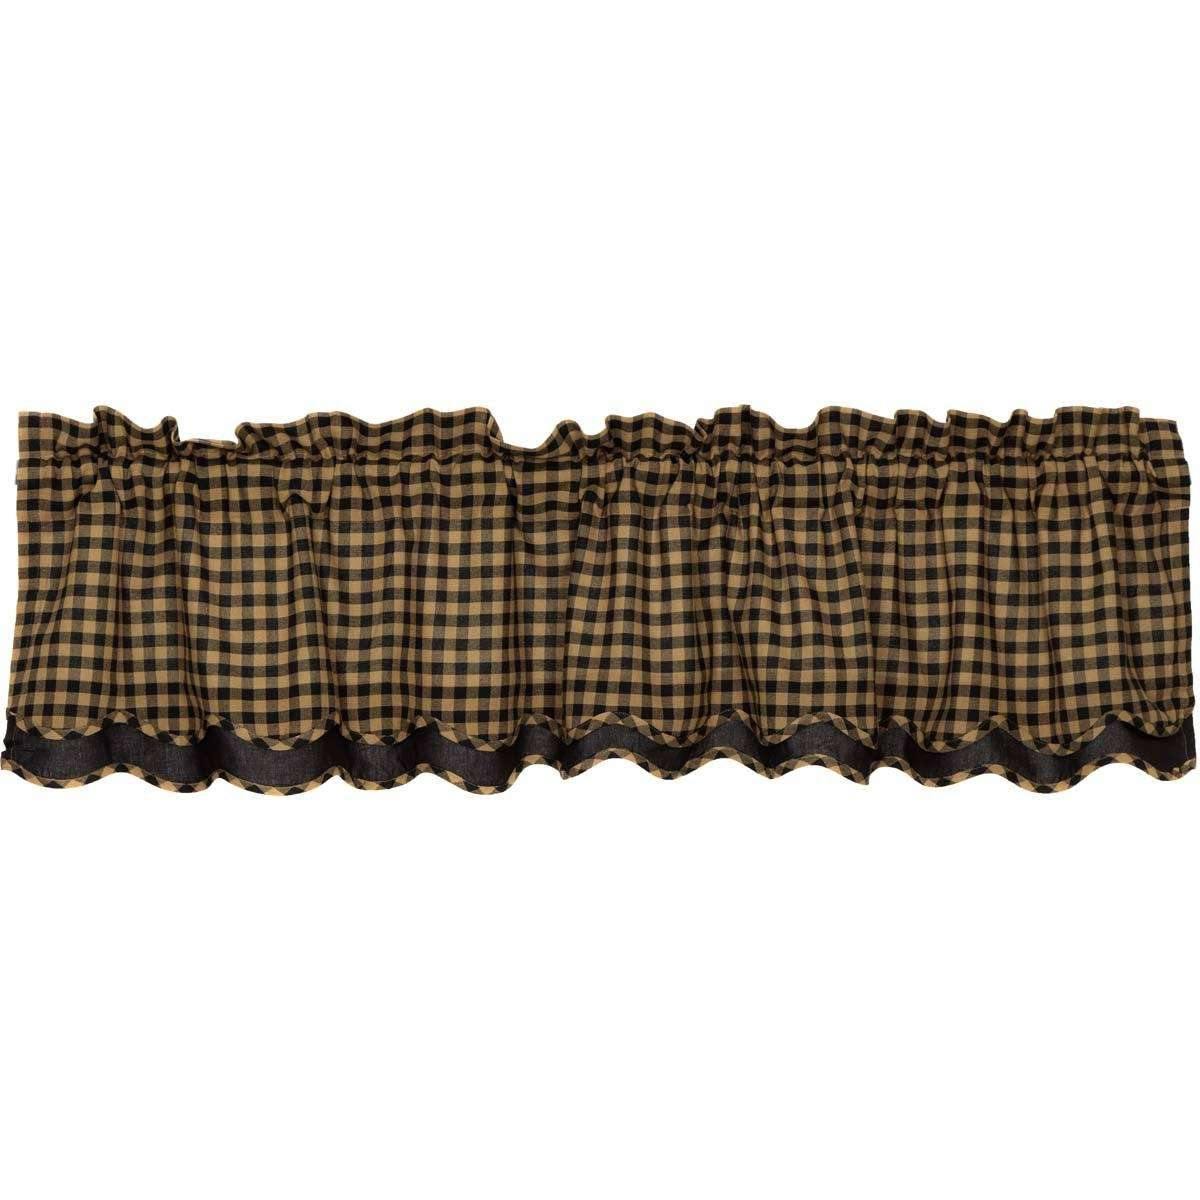 Black Check Scalloped Layered Valance Curtain 16x72 - The Fox Decor